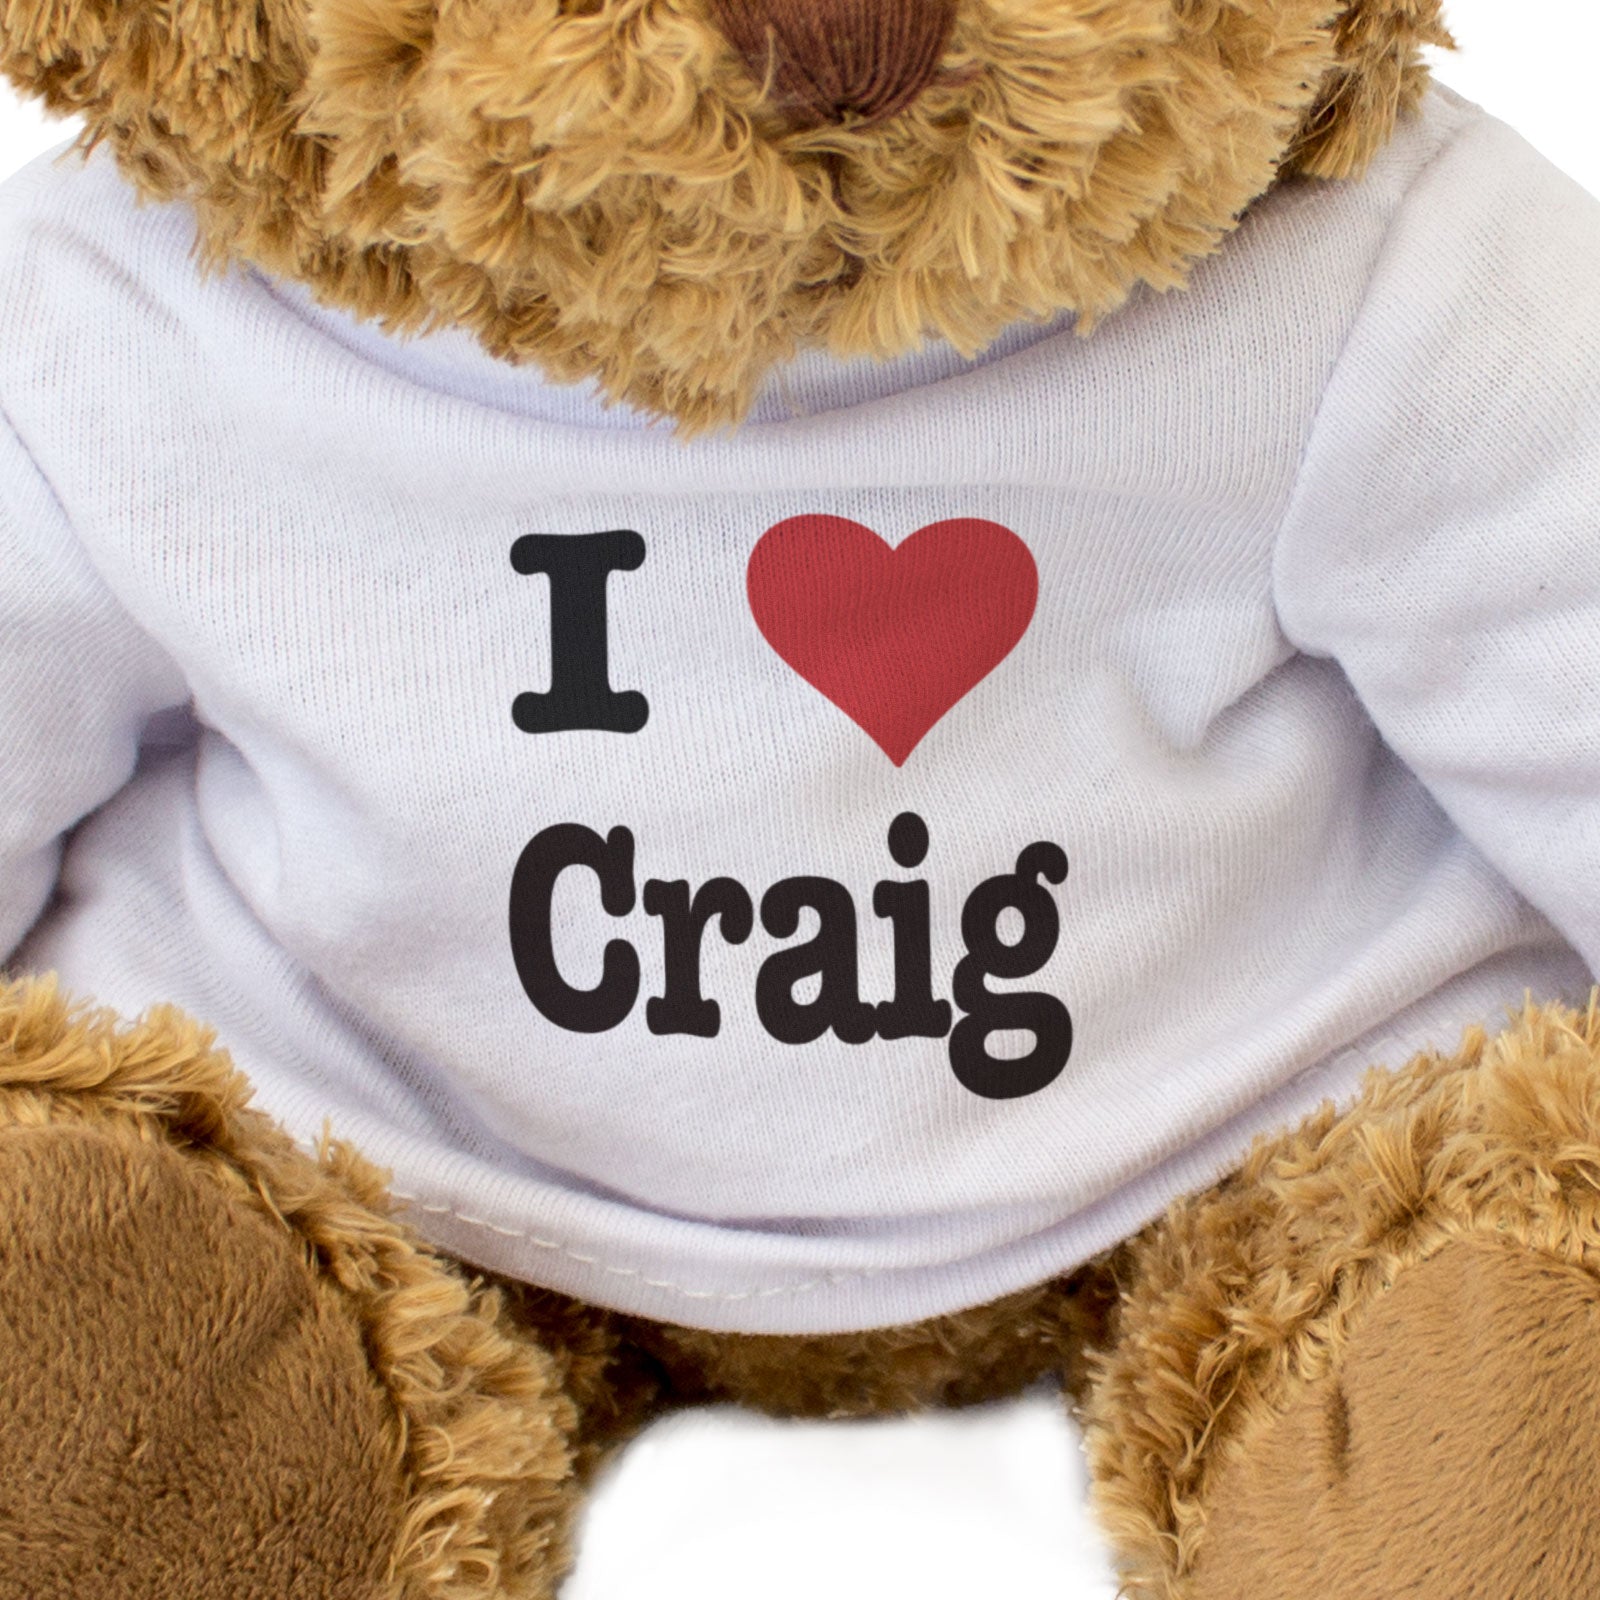 I Love Craig - Teddy Bear